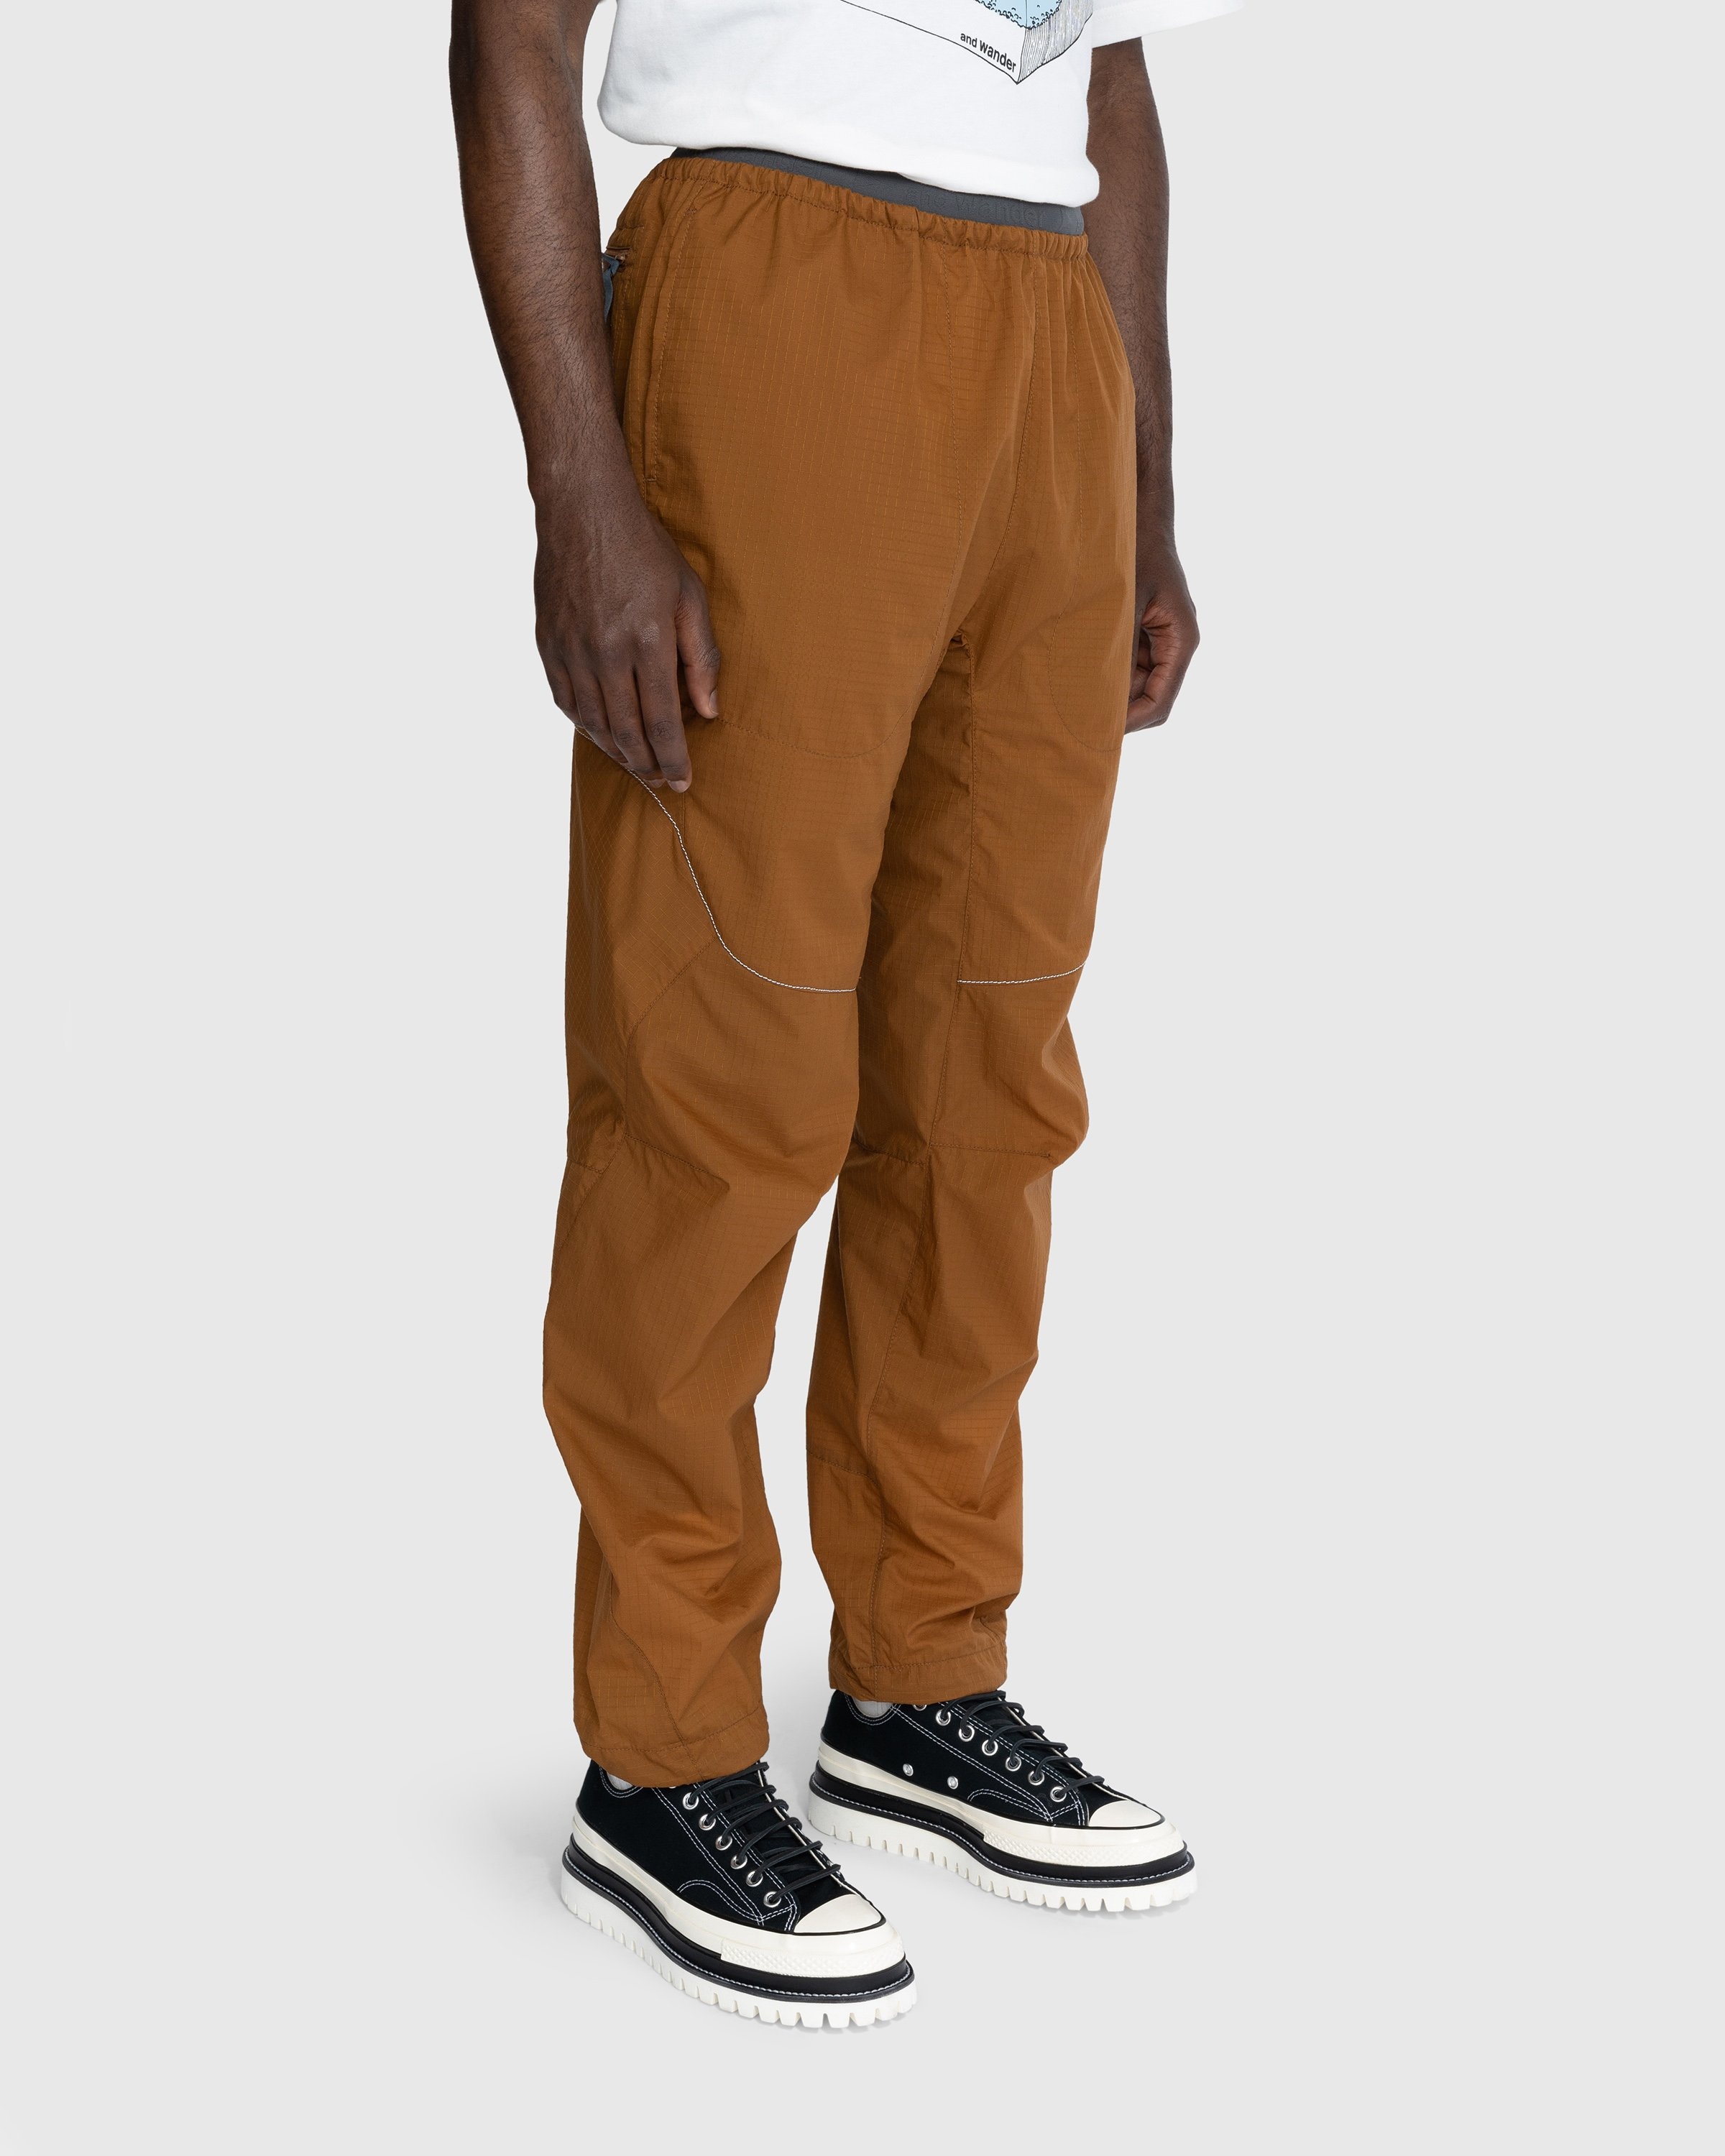 Mens Casual Pockets Cargo Pants Fashion Black Overalls Hip Hop